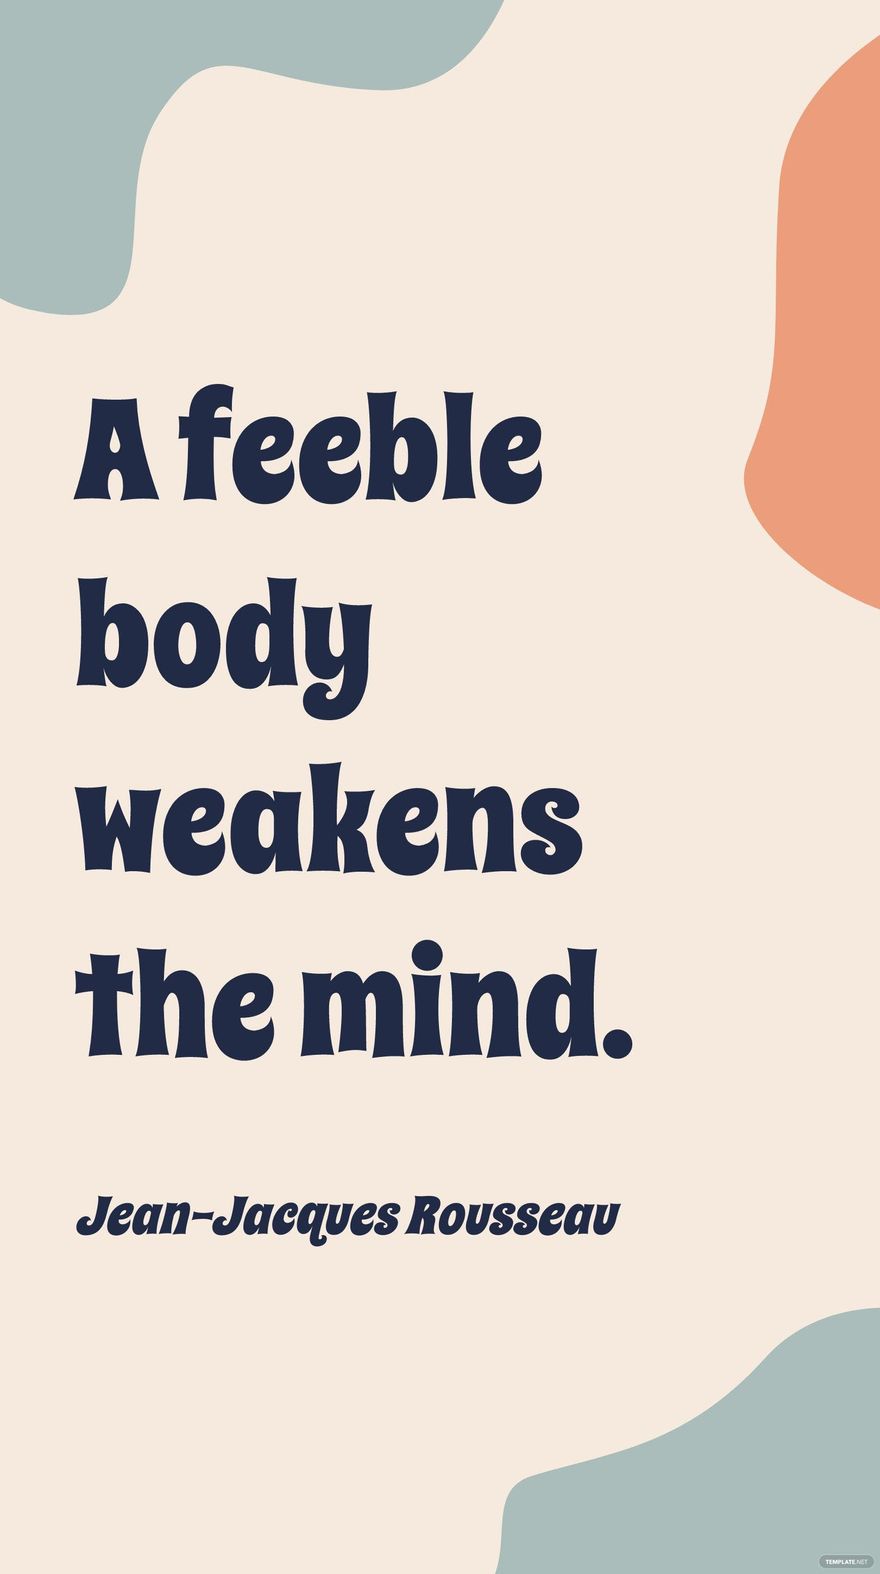 Free Jean-Jacques Rousseau - A feeble body weakens the mind. in JPG